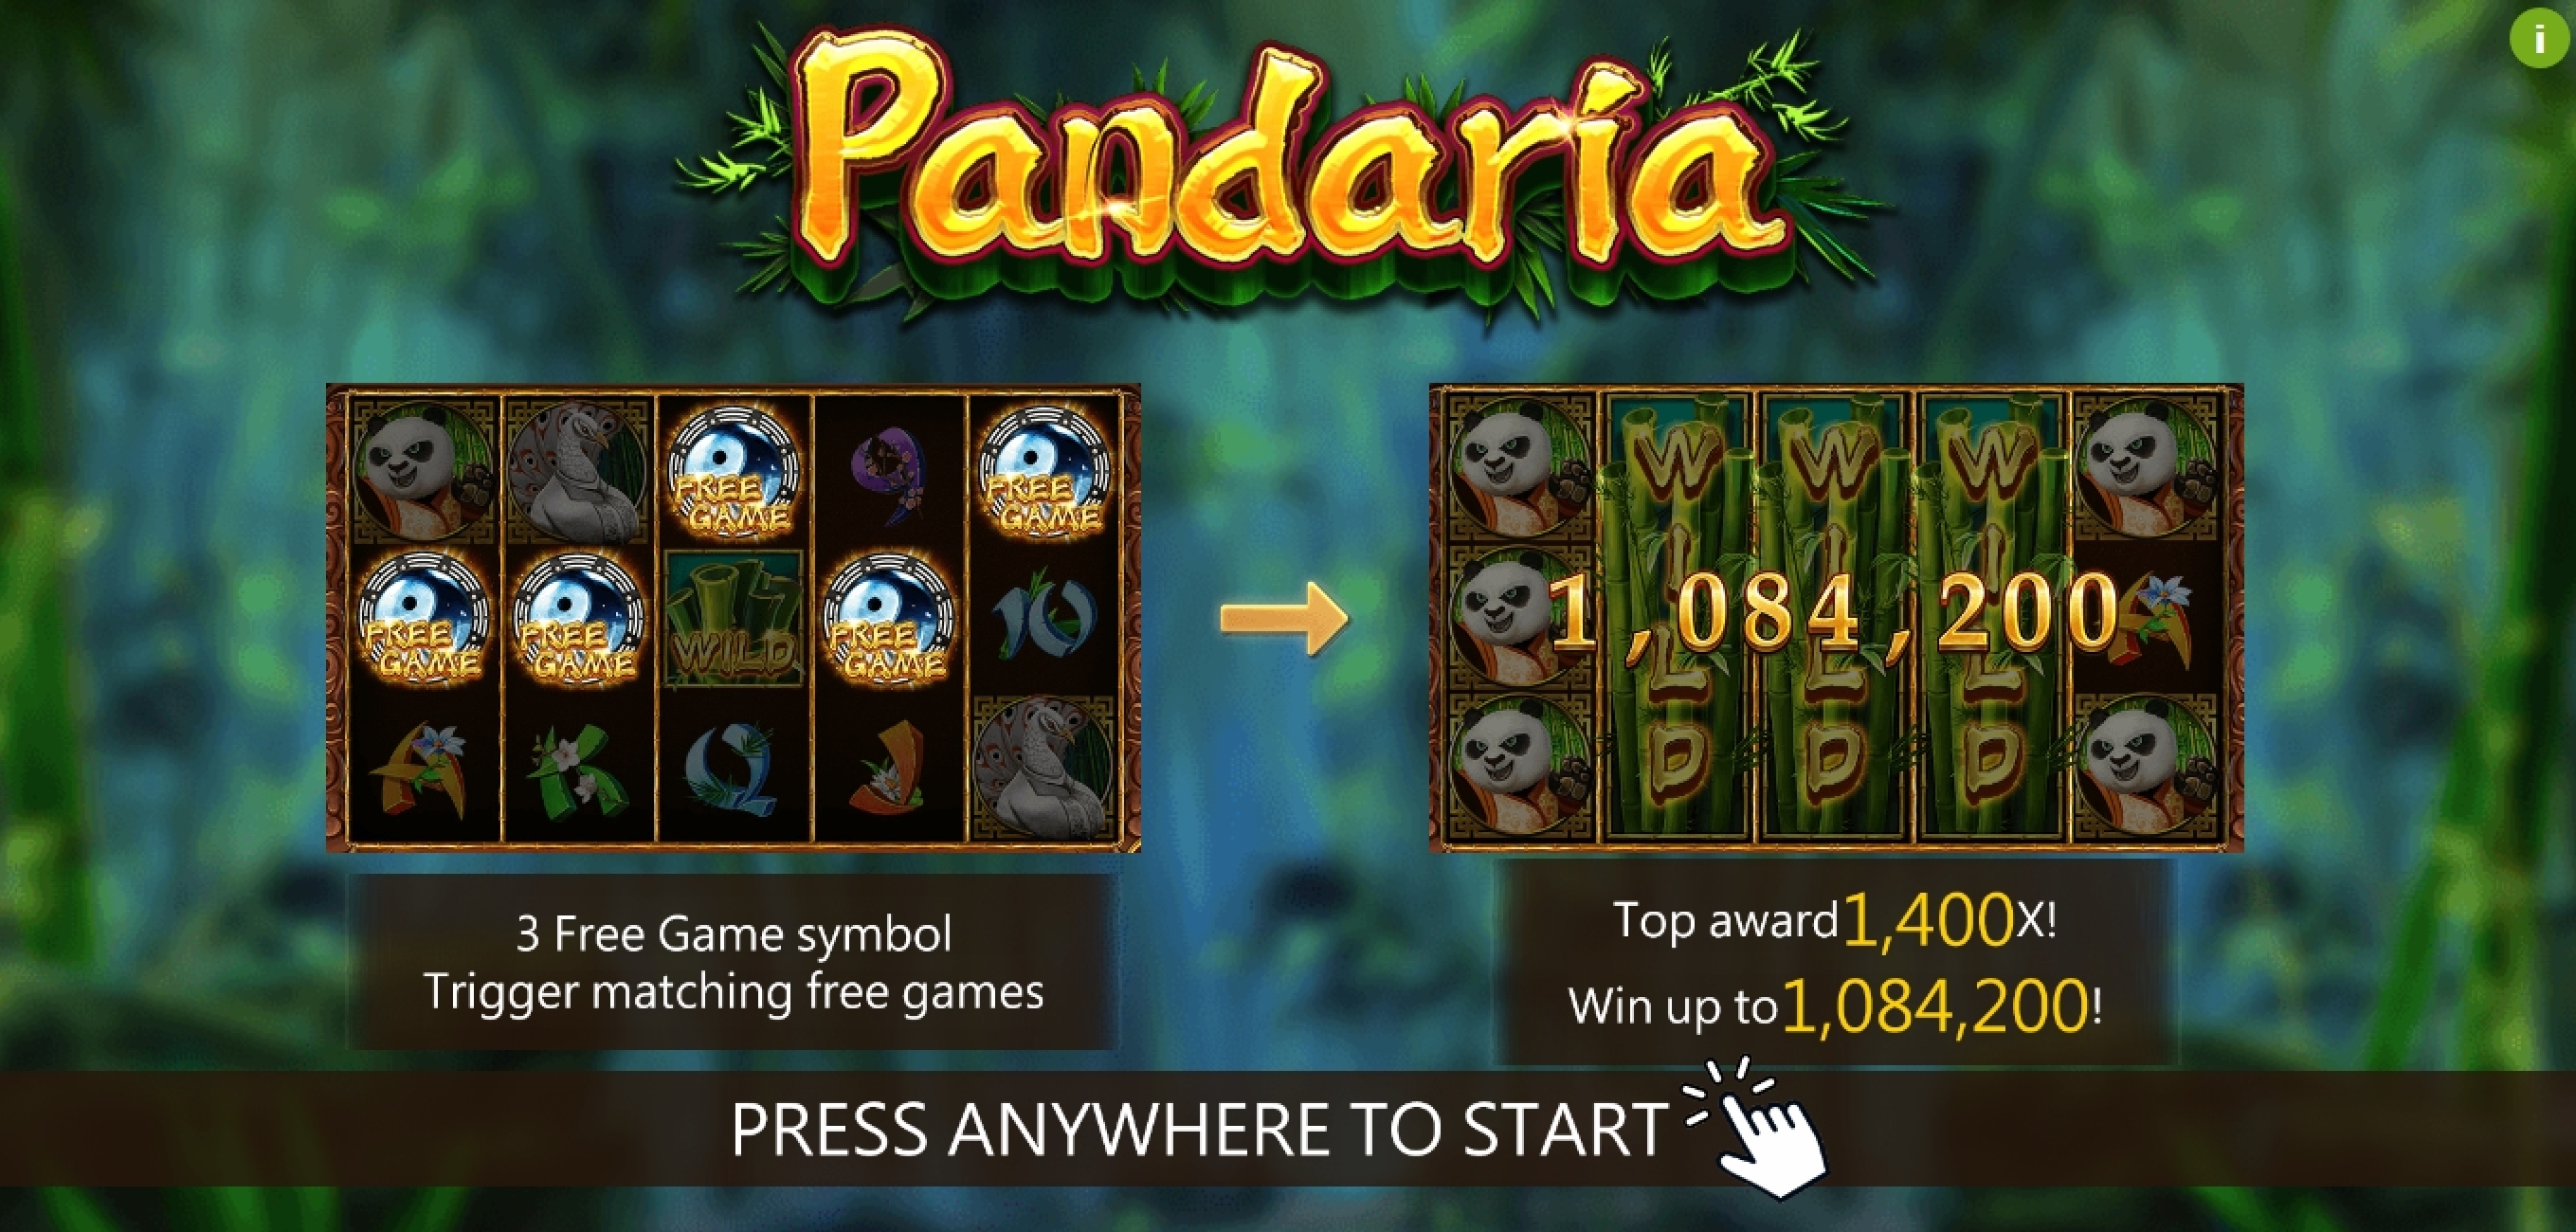 Play Pandaria Free Casino Slot Game by Dragoon Soft